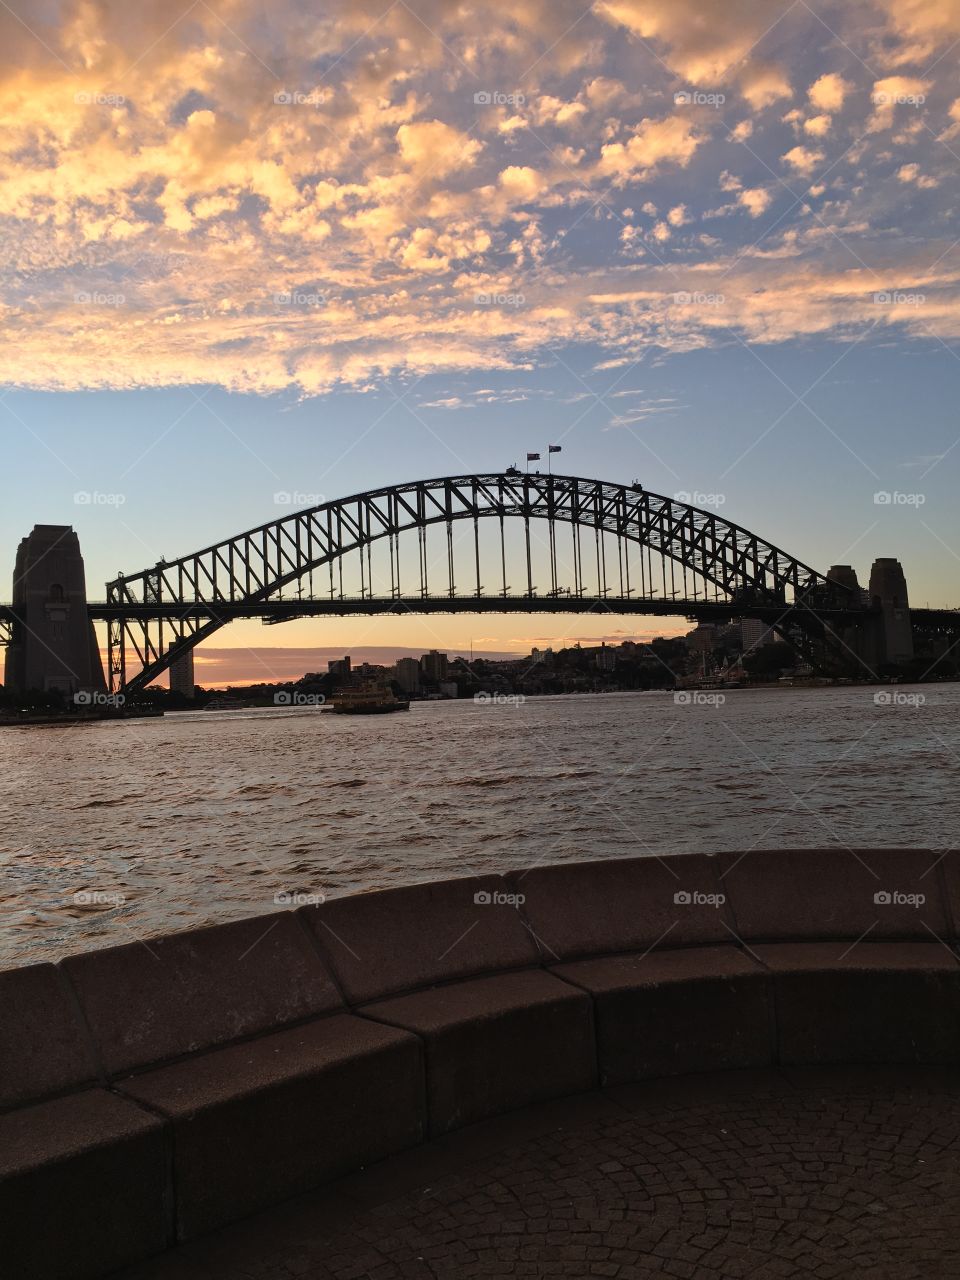 The 1149 meters long, Harbour Bridge, Sydney. 